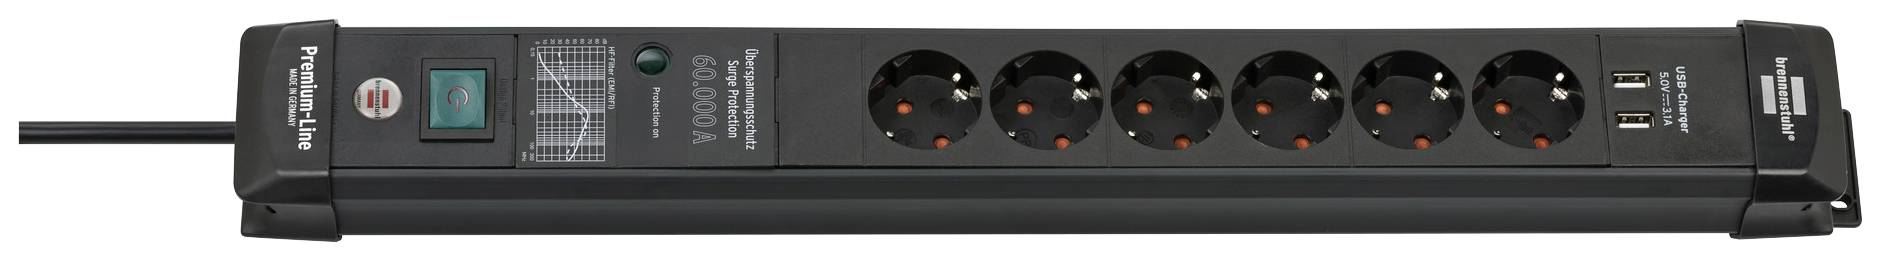 BRENNENSTUHL Premium-Line, power distribution unit with USB ports, 6 sockets, 3m, black, with switch